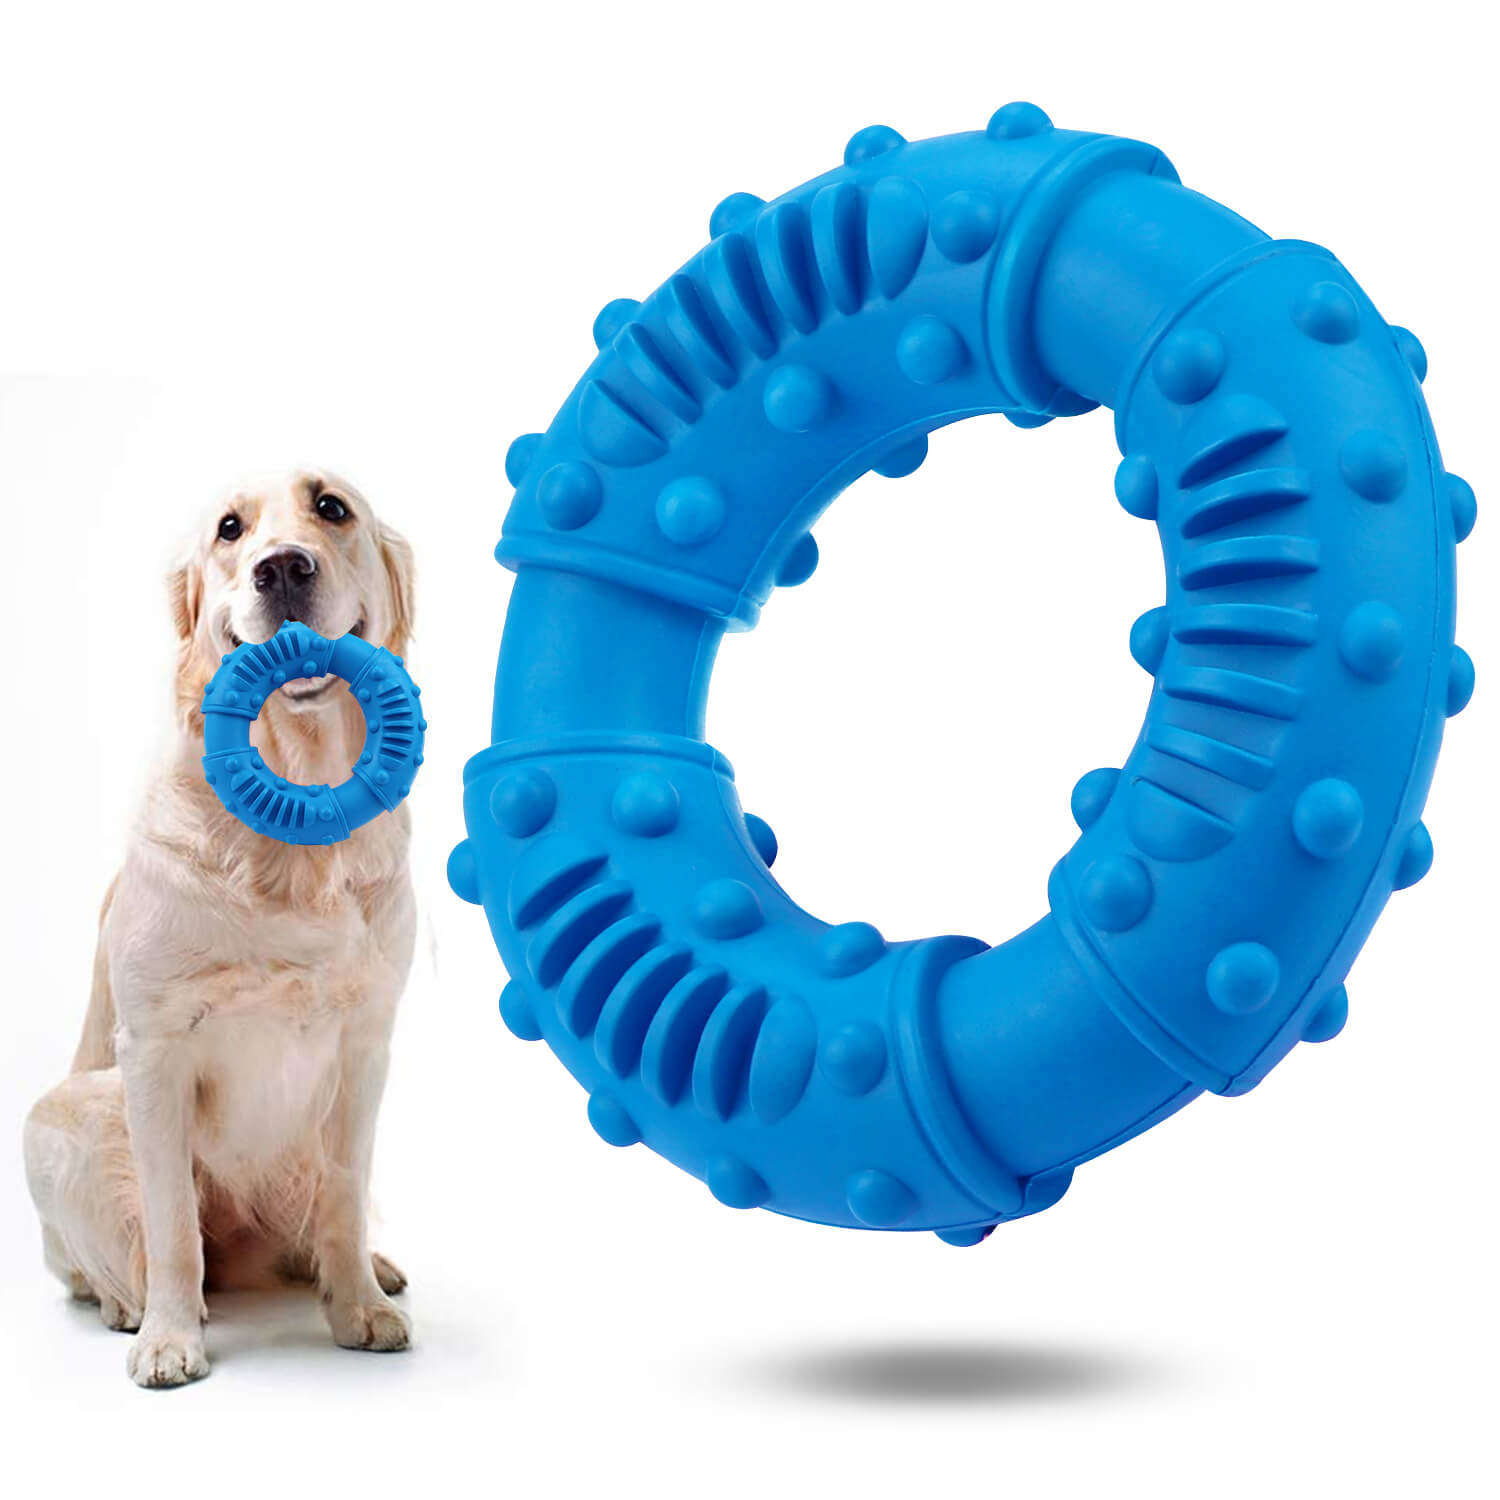 Circle dog chew toys